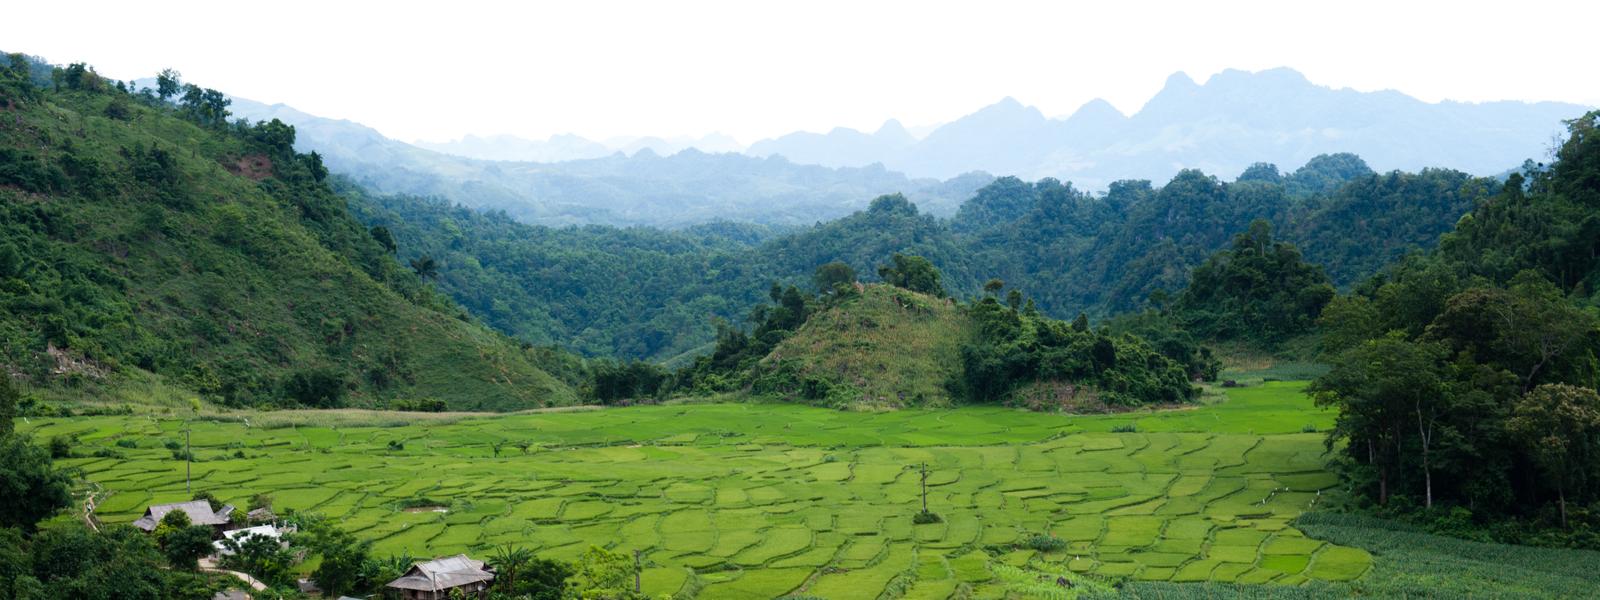 Vietnam hills